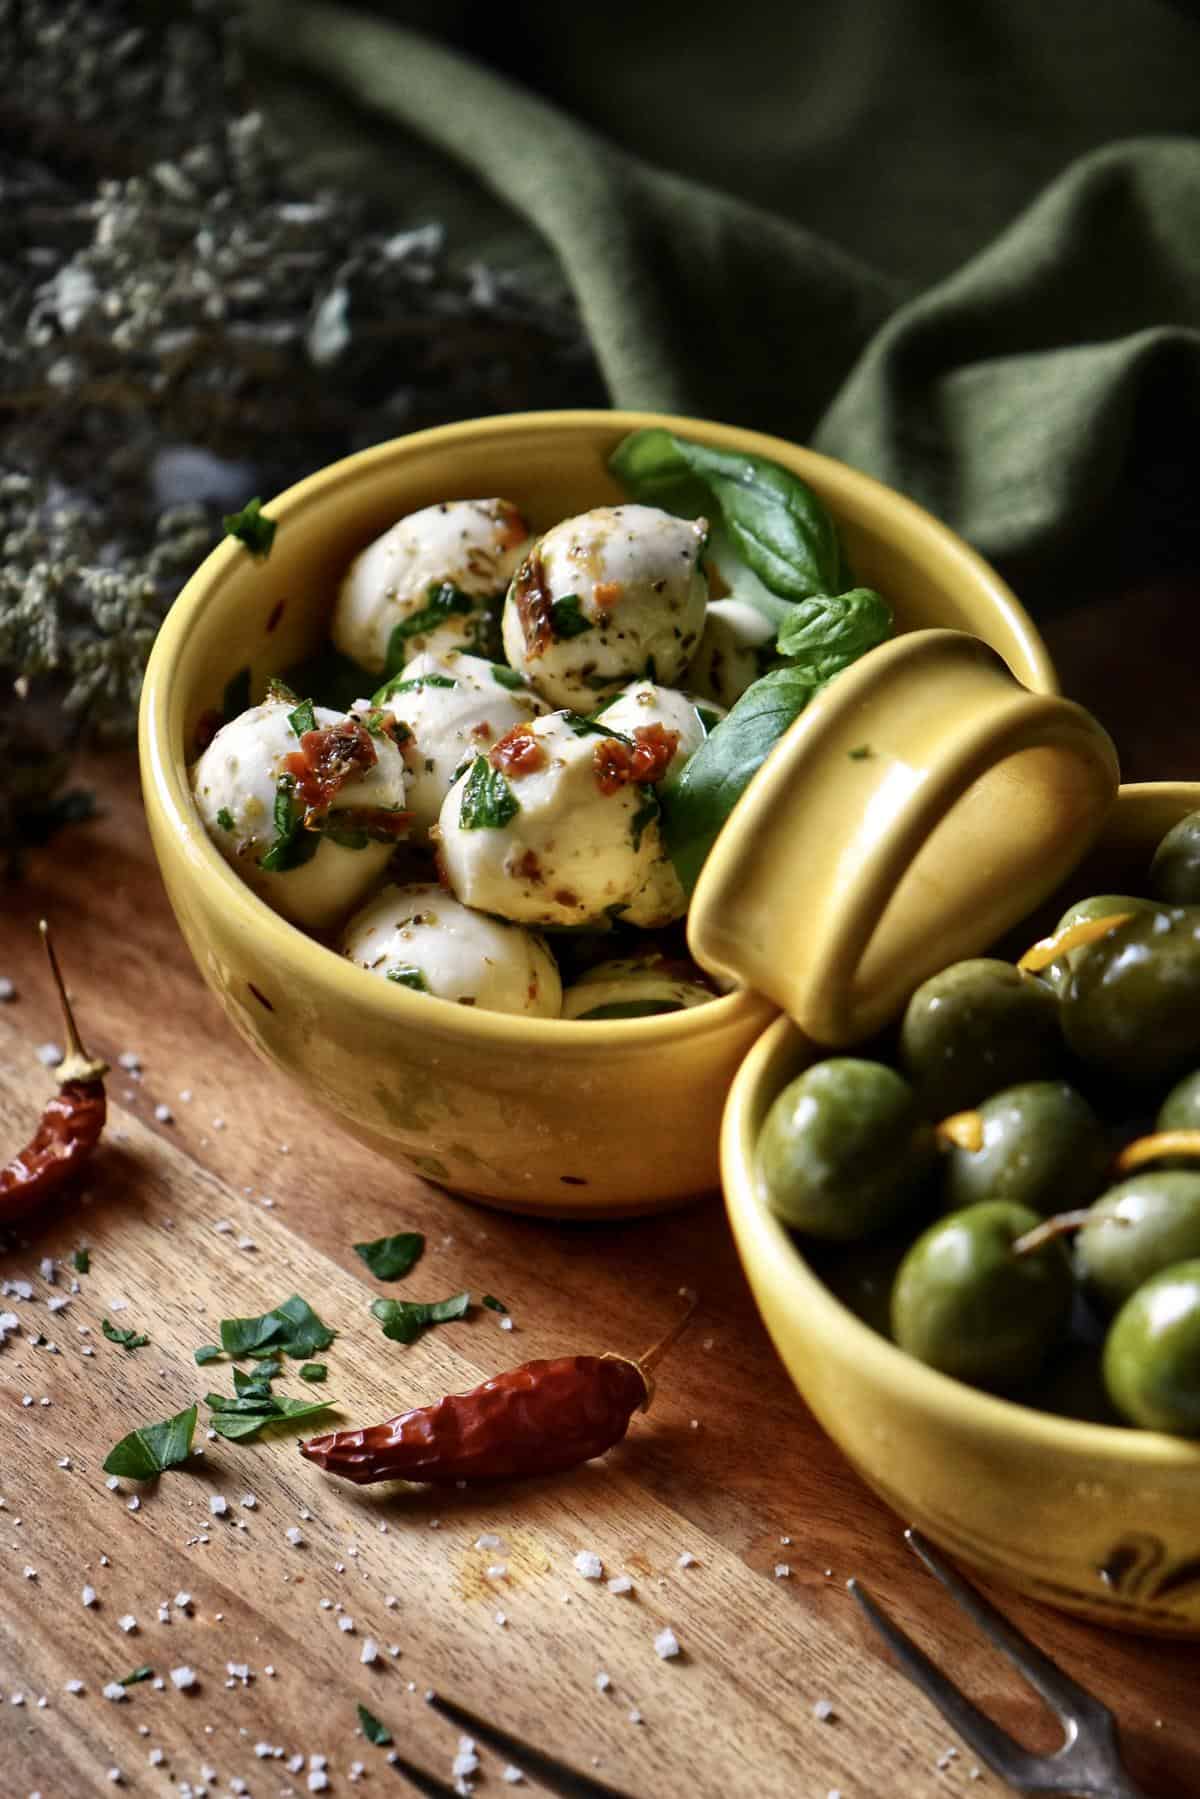 Marinated mozzarella balls aka Bocconcini, in a ceramic dish alongside some marinated olives.